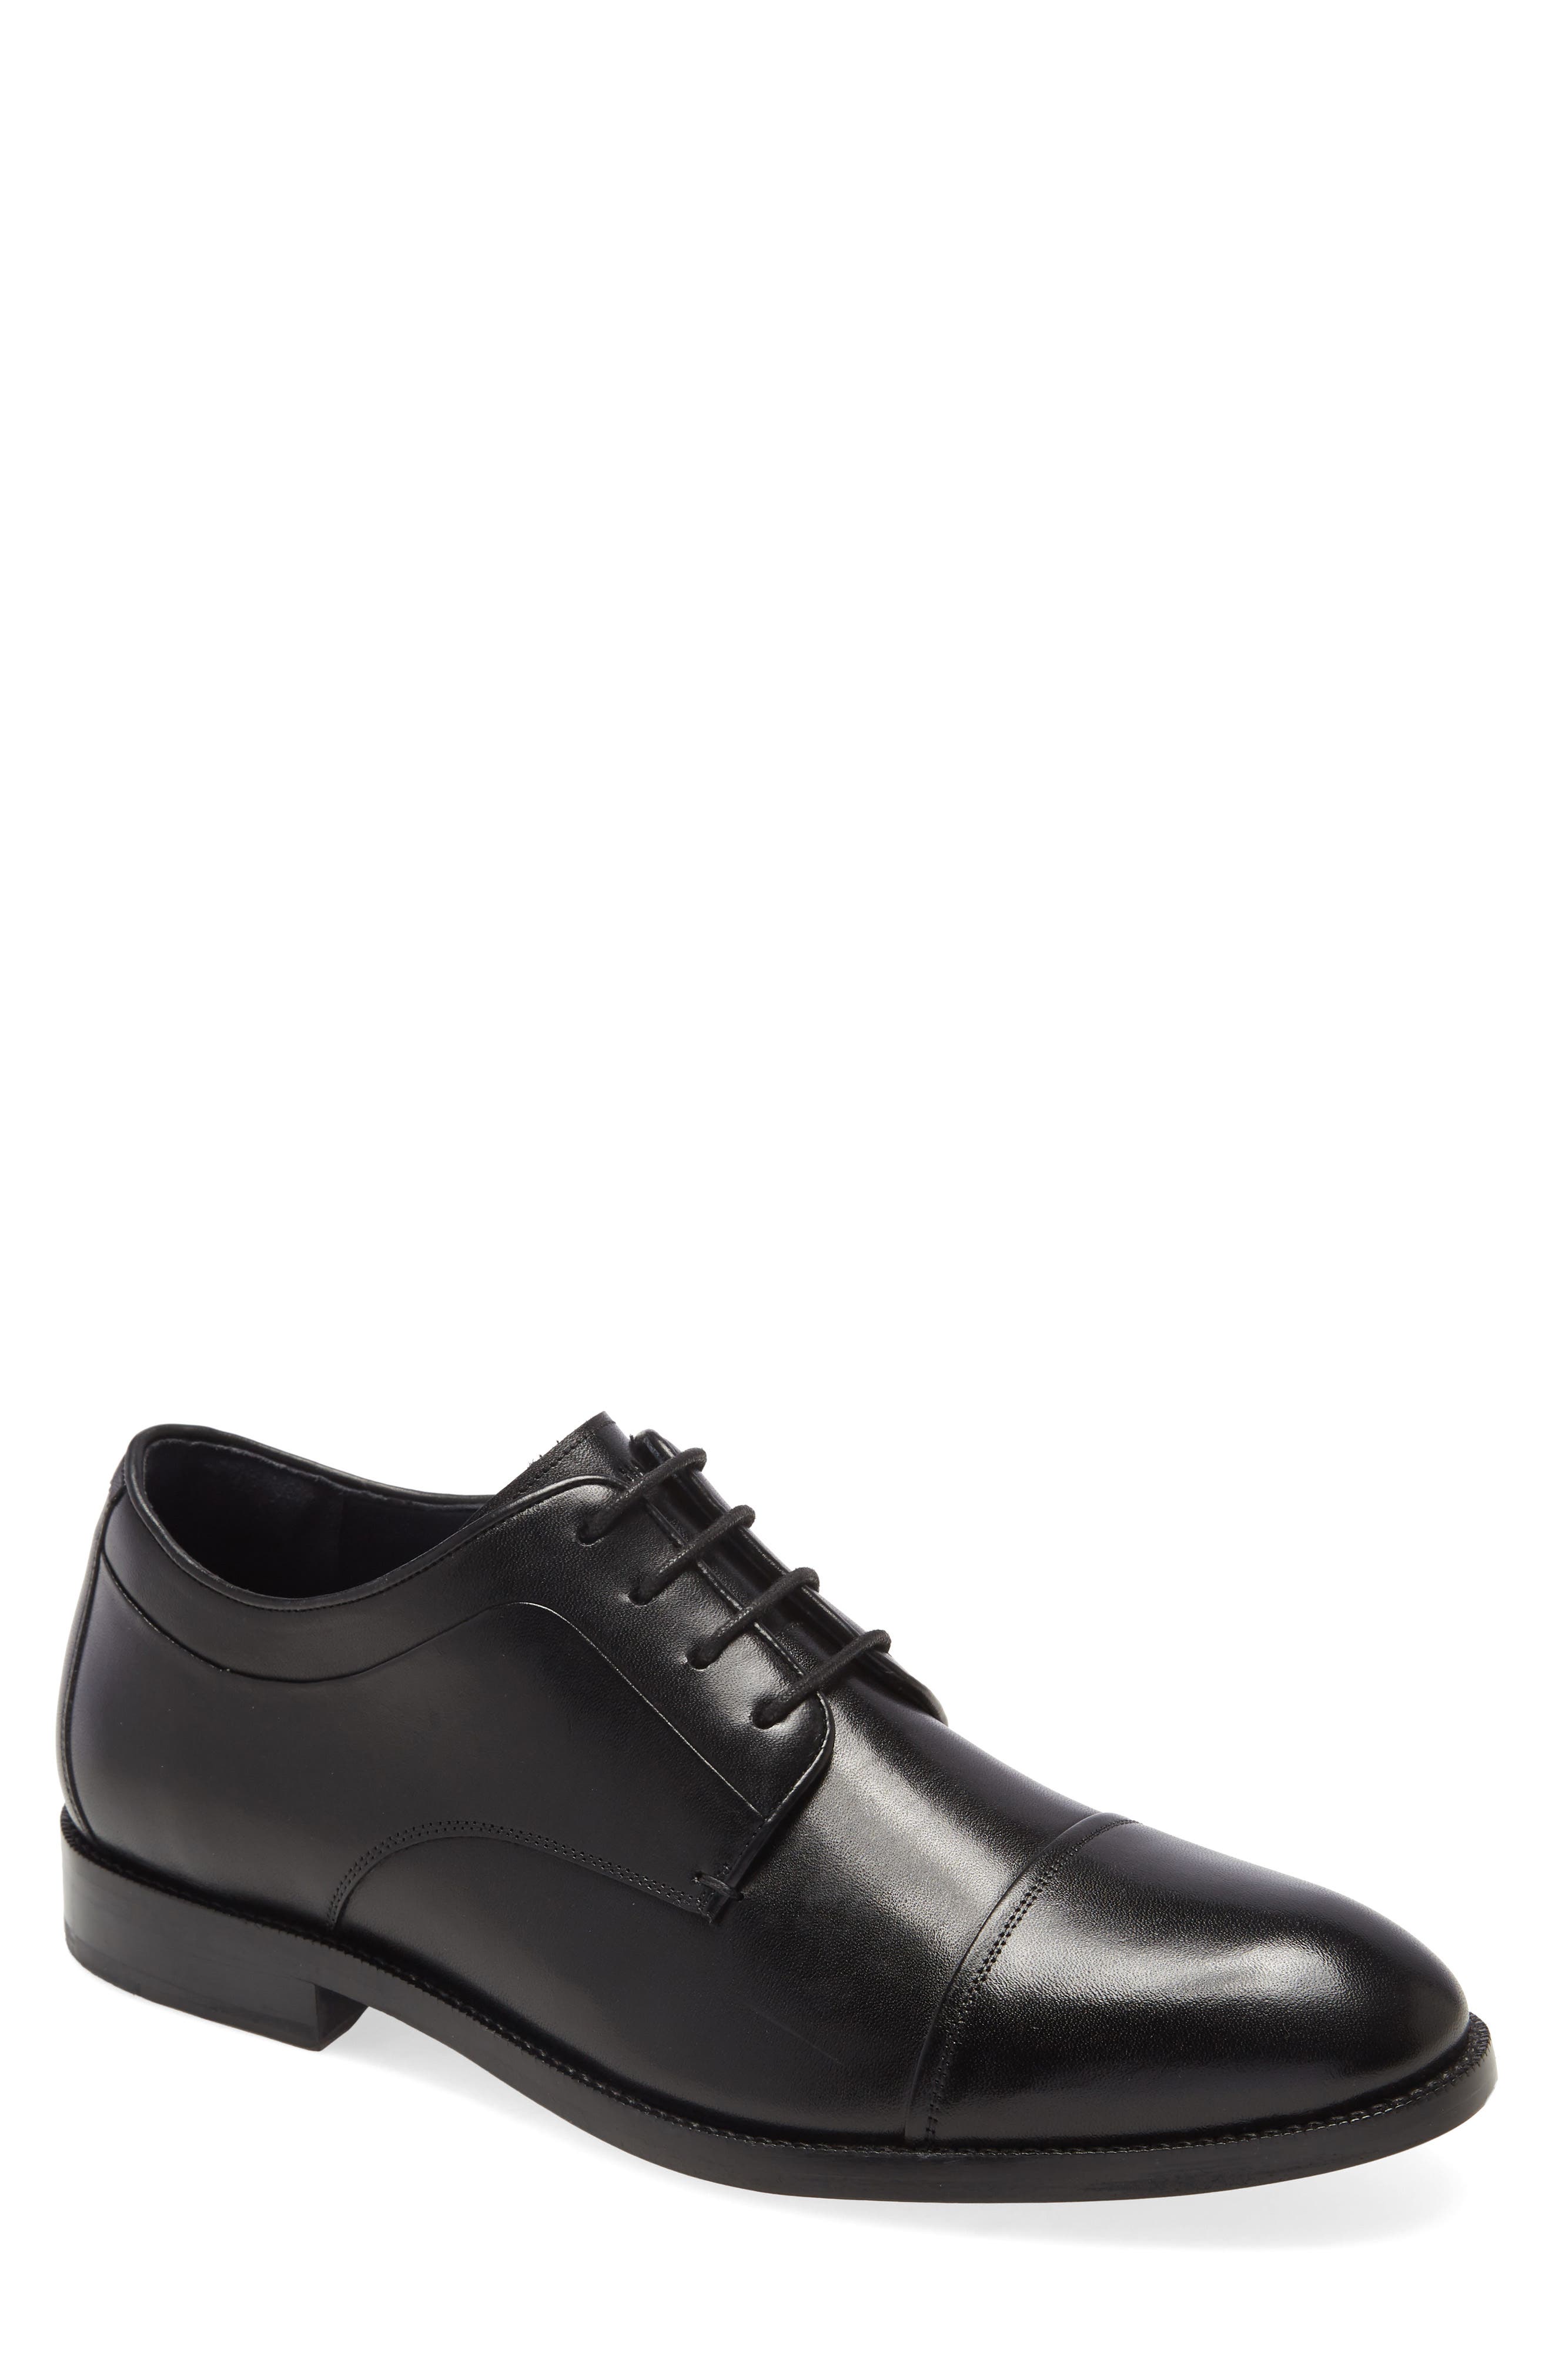 Modern Men Dress Oxfords Shoes Lace Up Cap Toe Elegant Black 